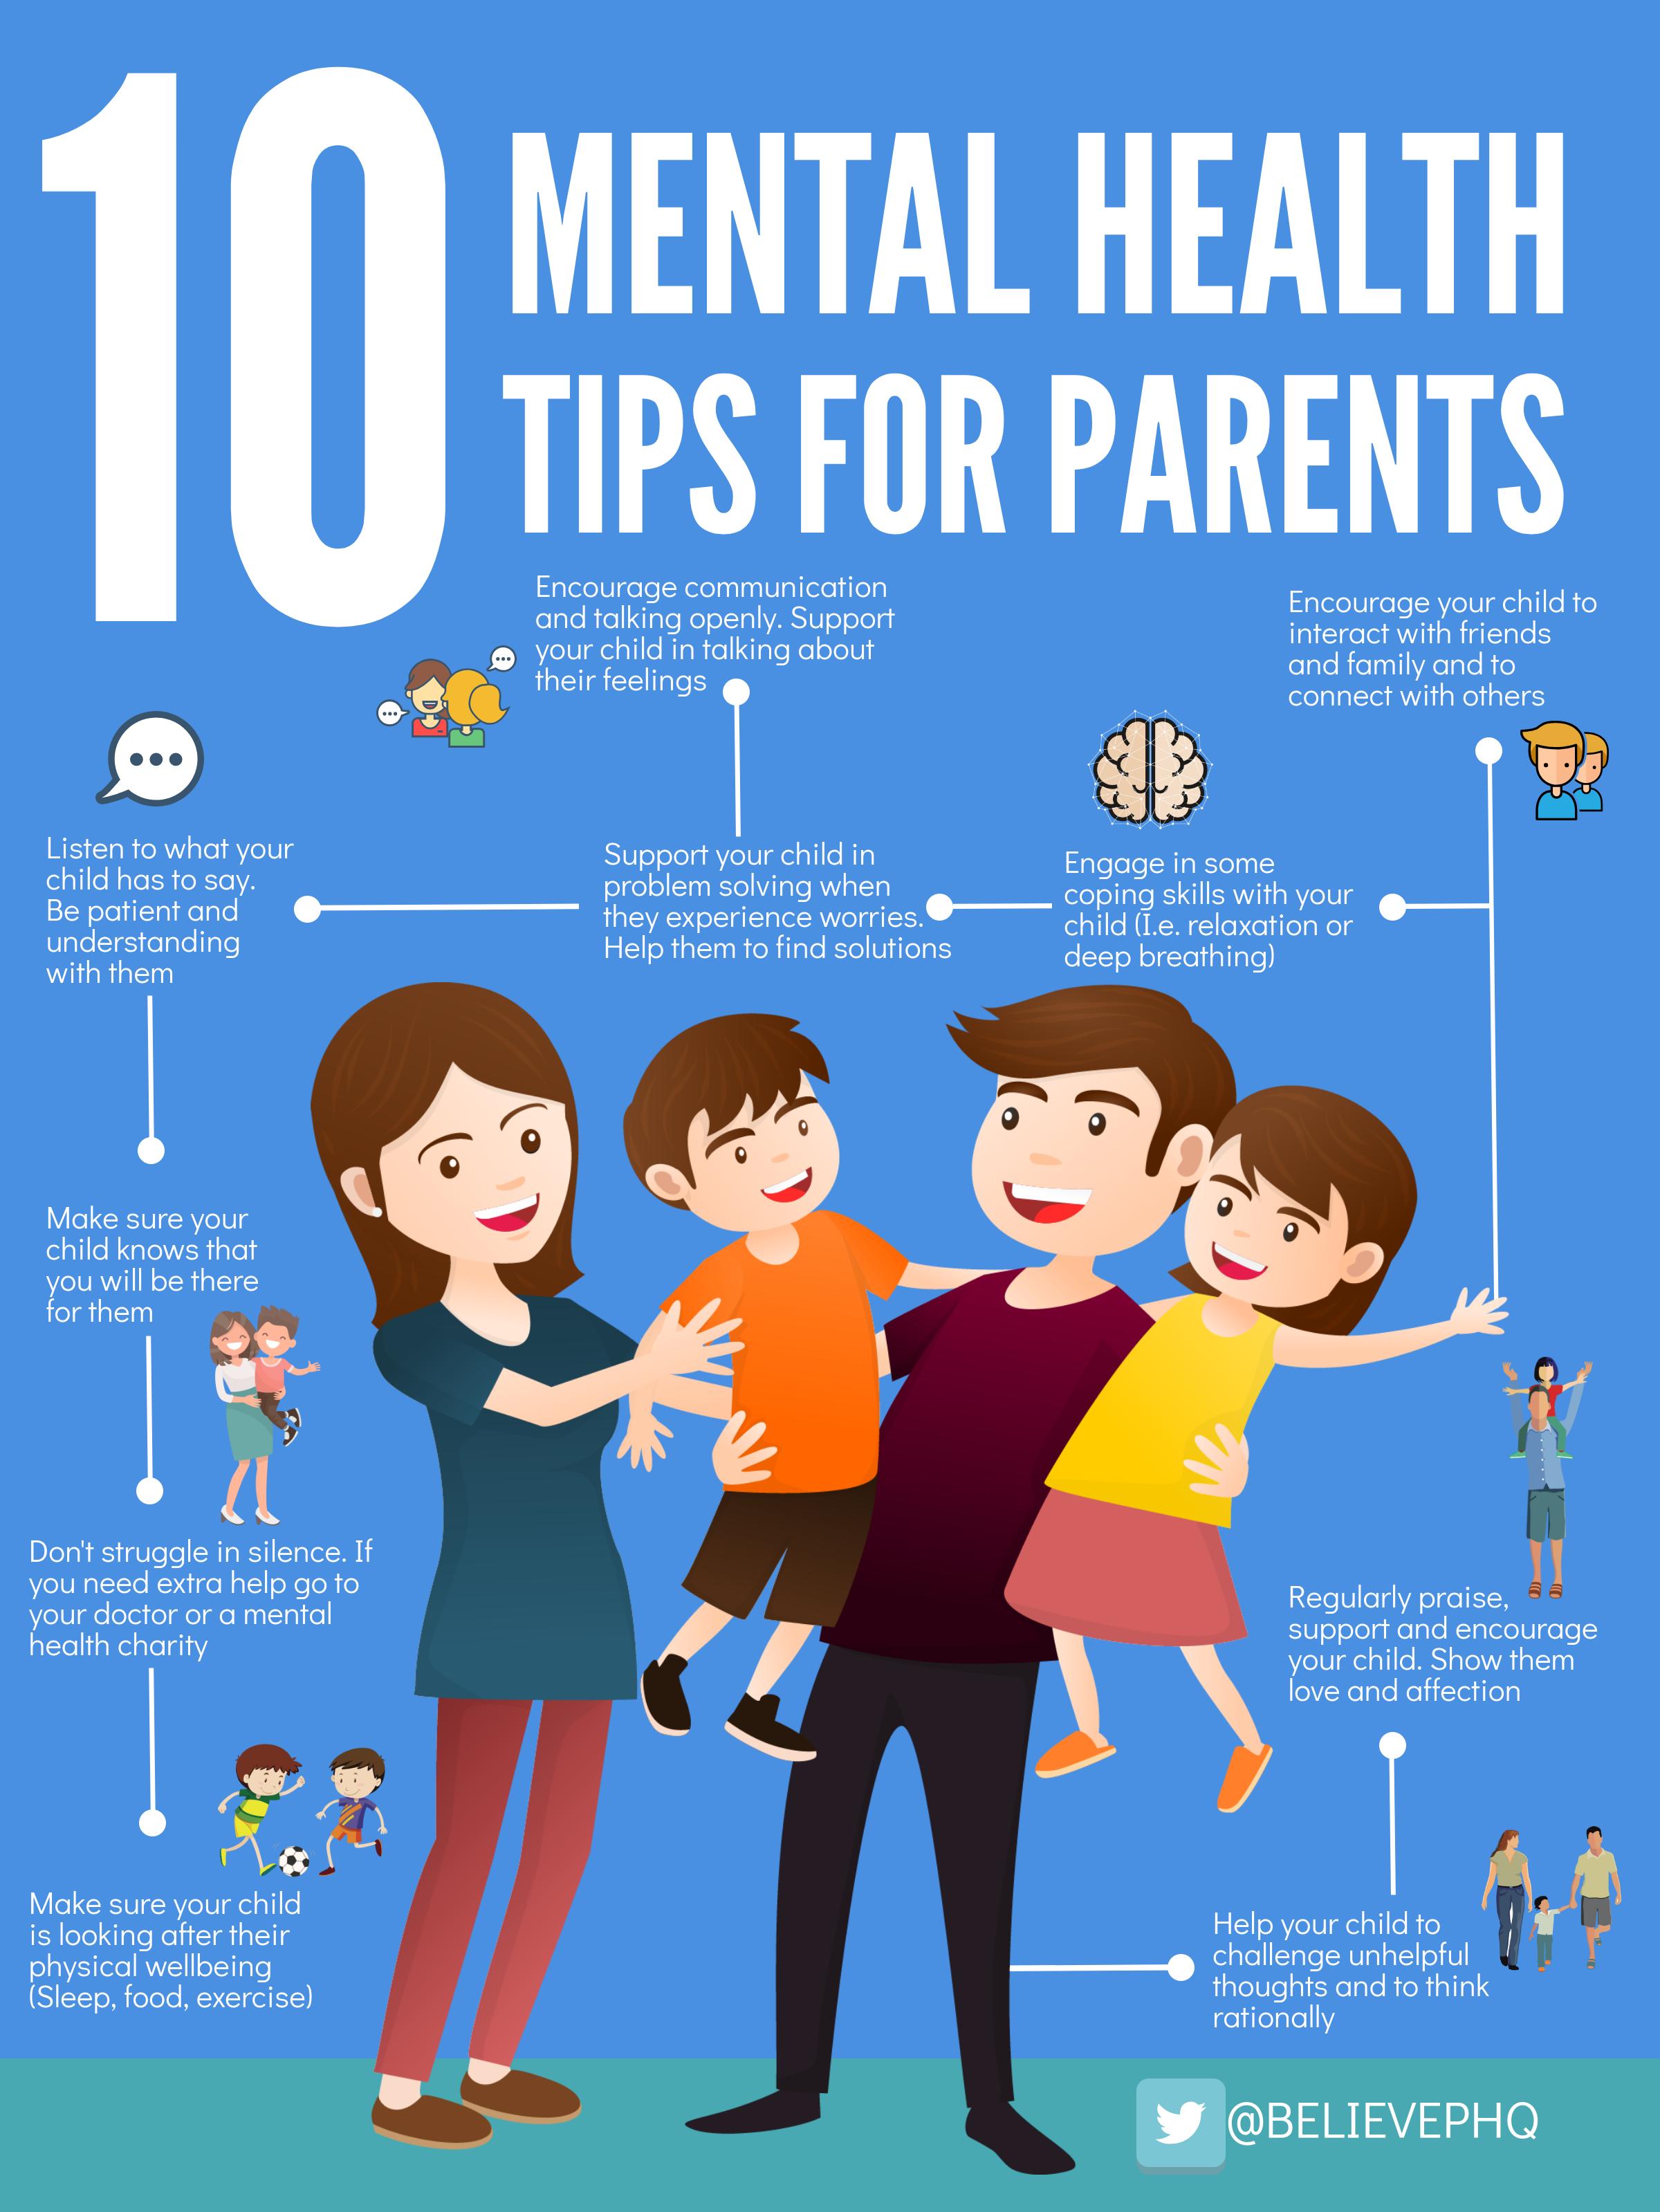 BelievePerform on X: "10 mental health tips for parents #WorldMentalHealthDay #WorldMentalHealthDay2019 #WMHD #WMHD19 https://t.co/QXw6nhOGQB" / X